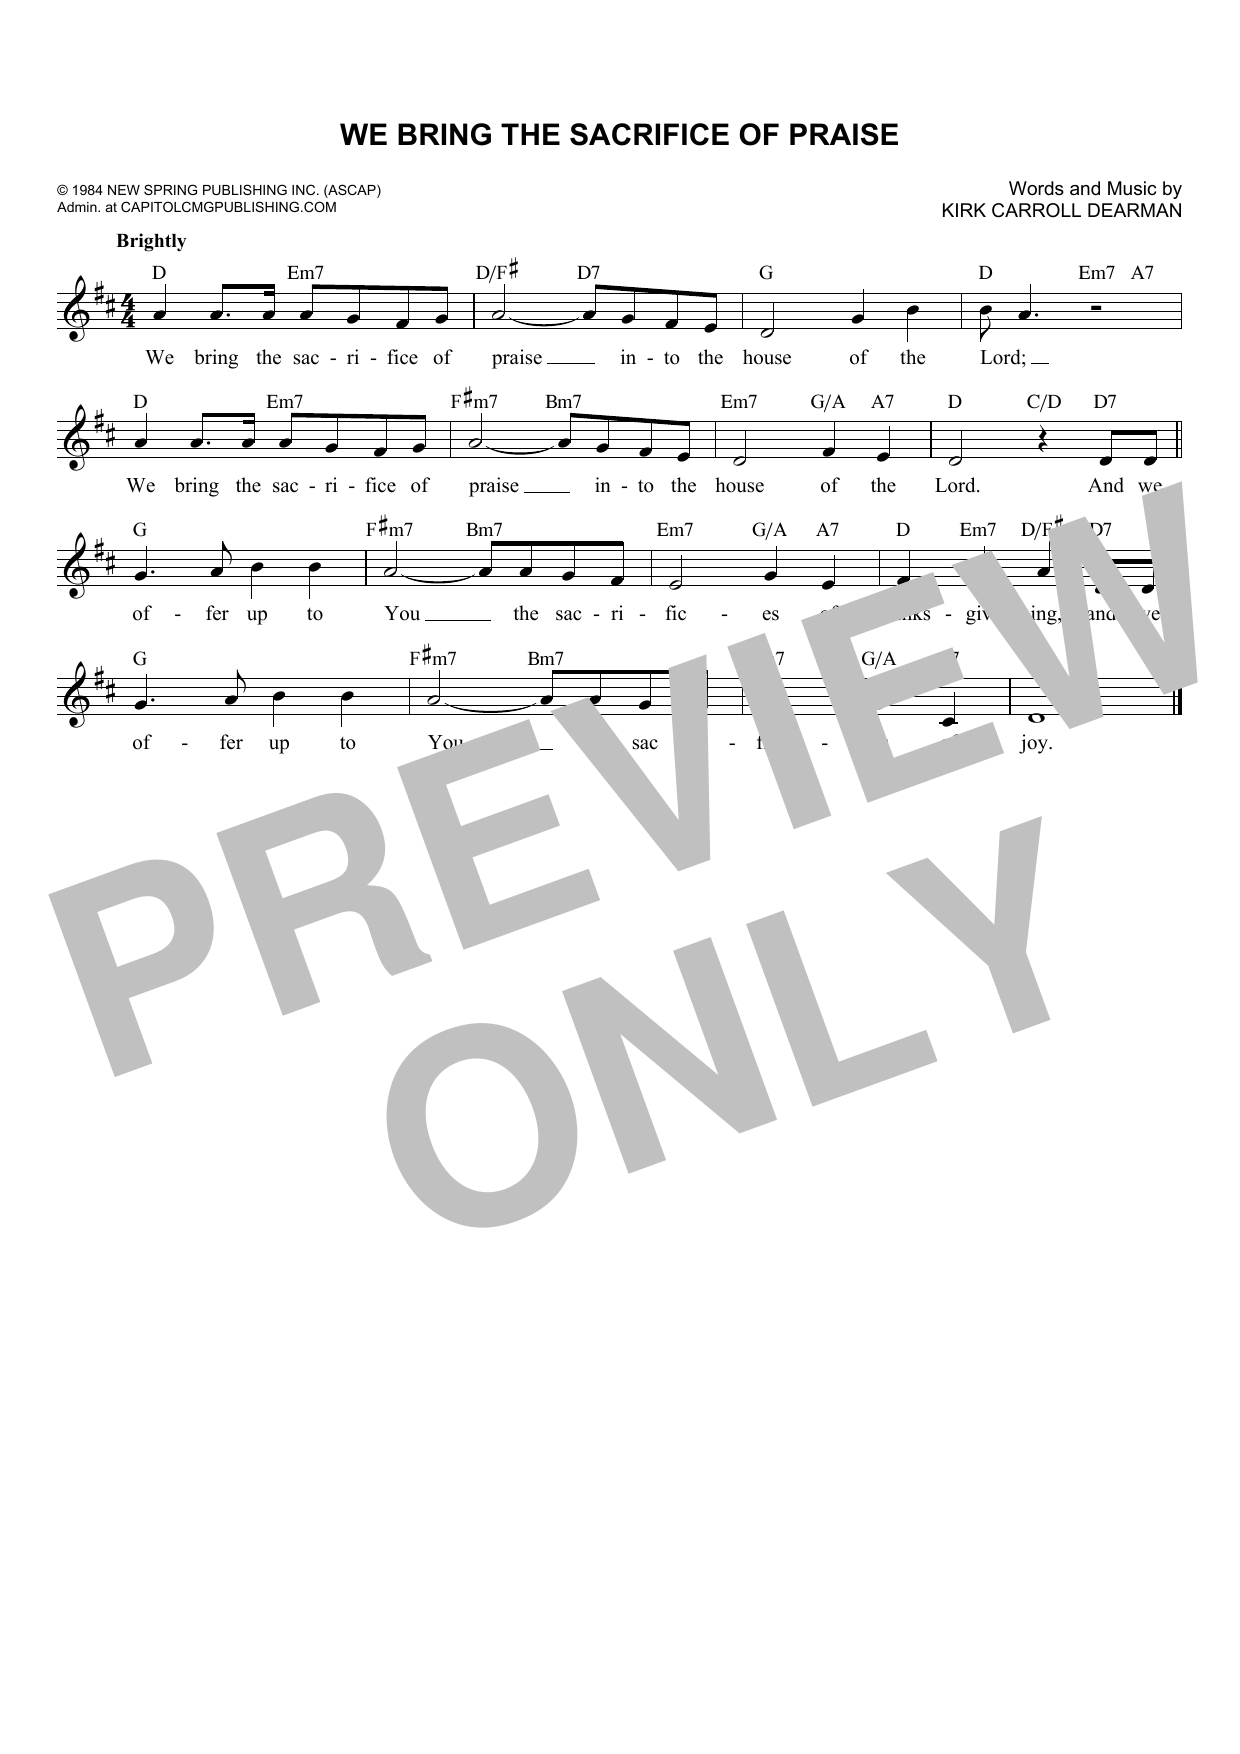 Kirk Carroll Dearman We Bring The Sacrifice Of Praise Sheet Music Notes & Chords for Melody Line, Lyrics & Chords - Download or Print PDF